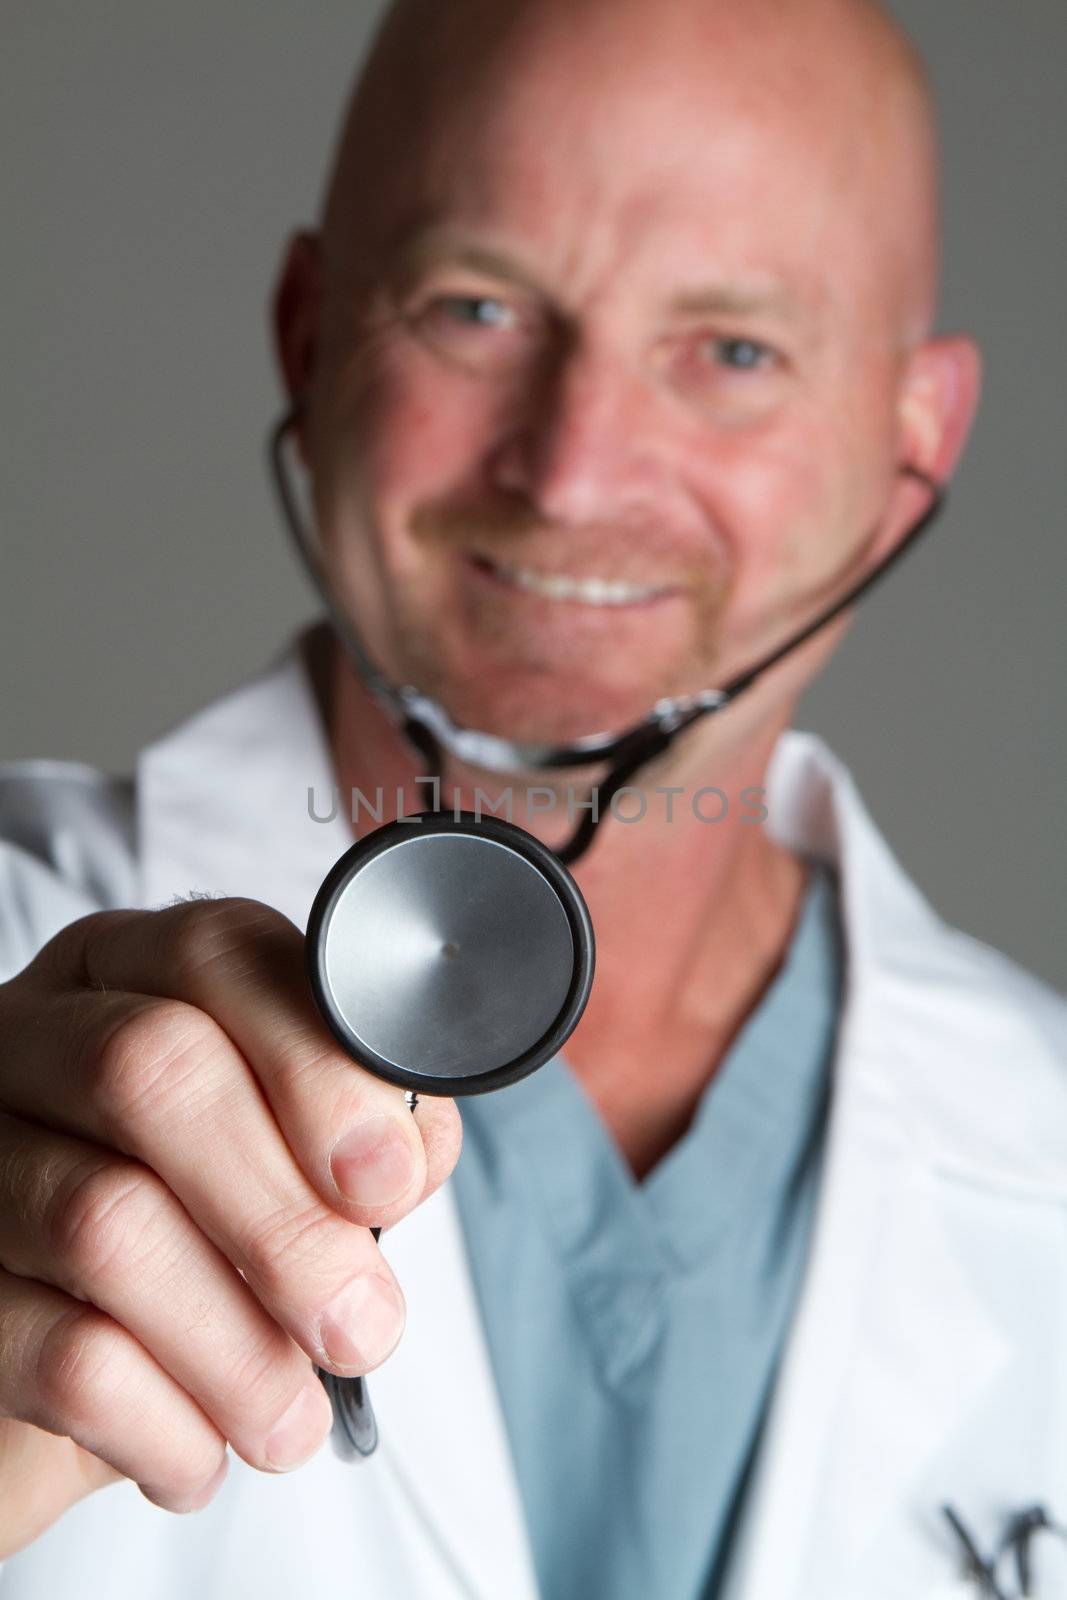 Smiling doctor holding stethoscope